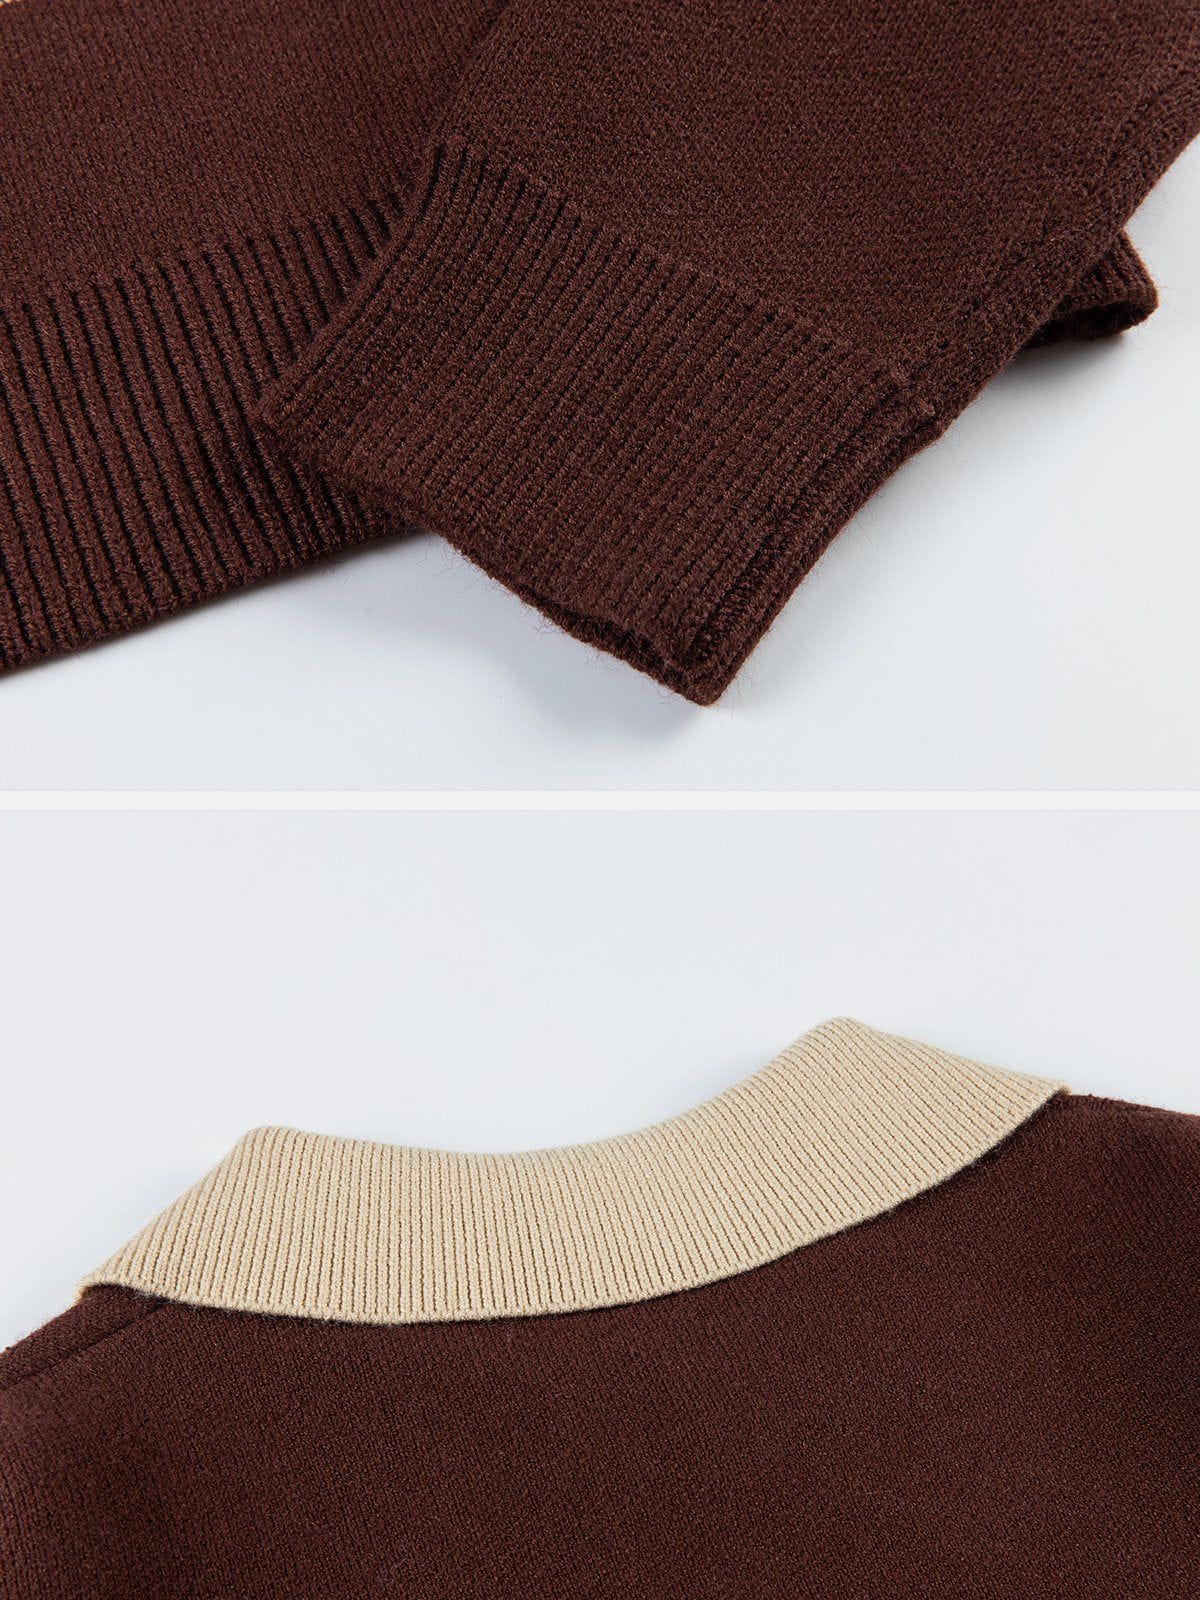 Majesda® - Vintage Polo Collar Sweater outfit ideas streetwear fashion